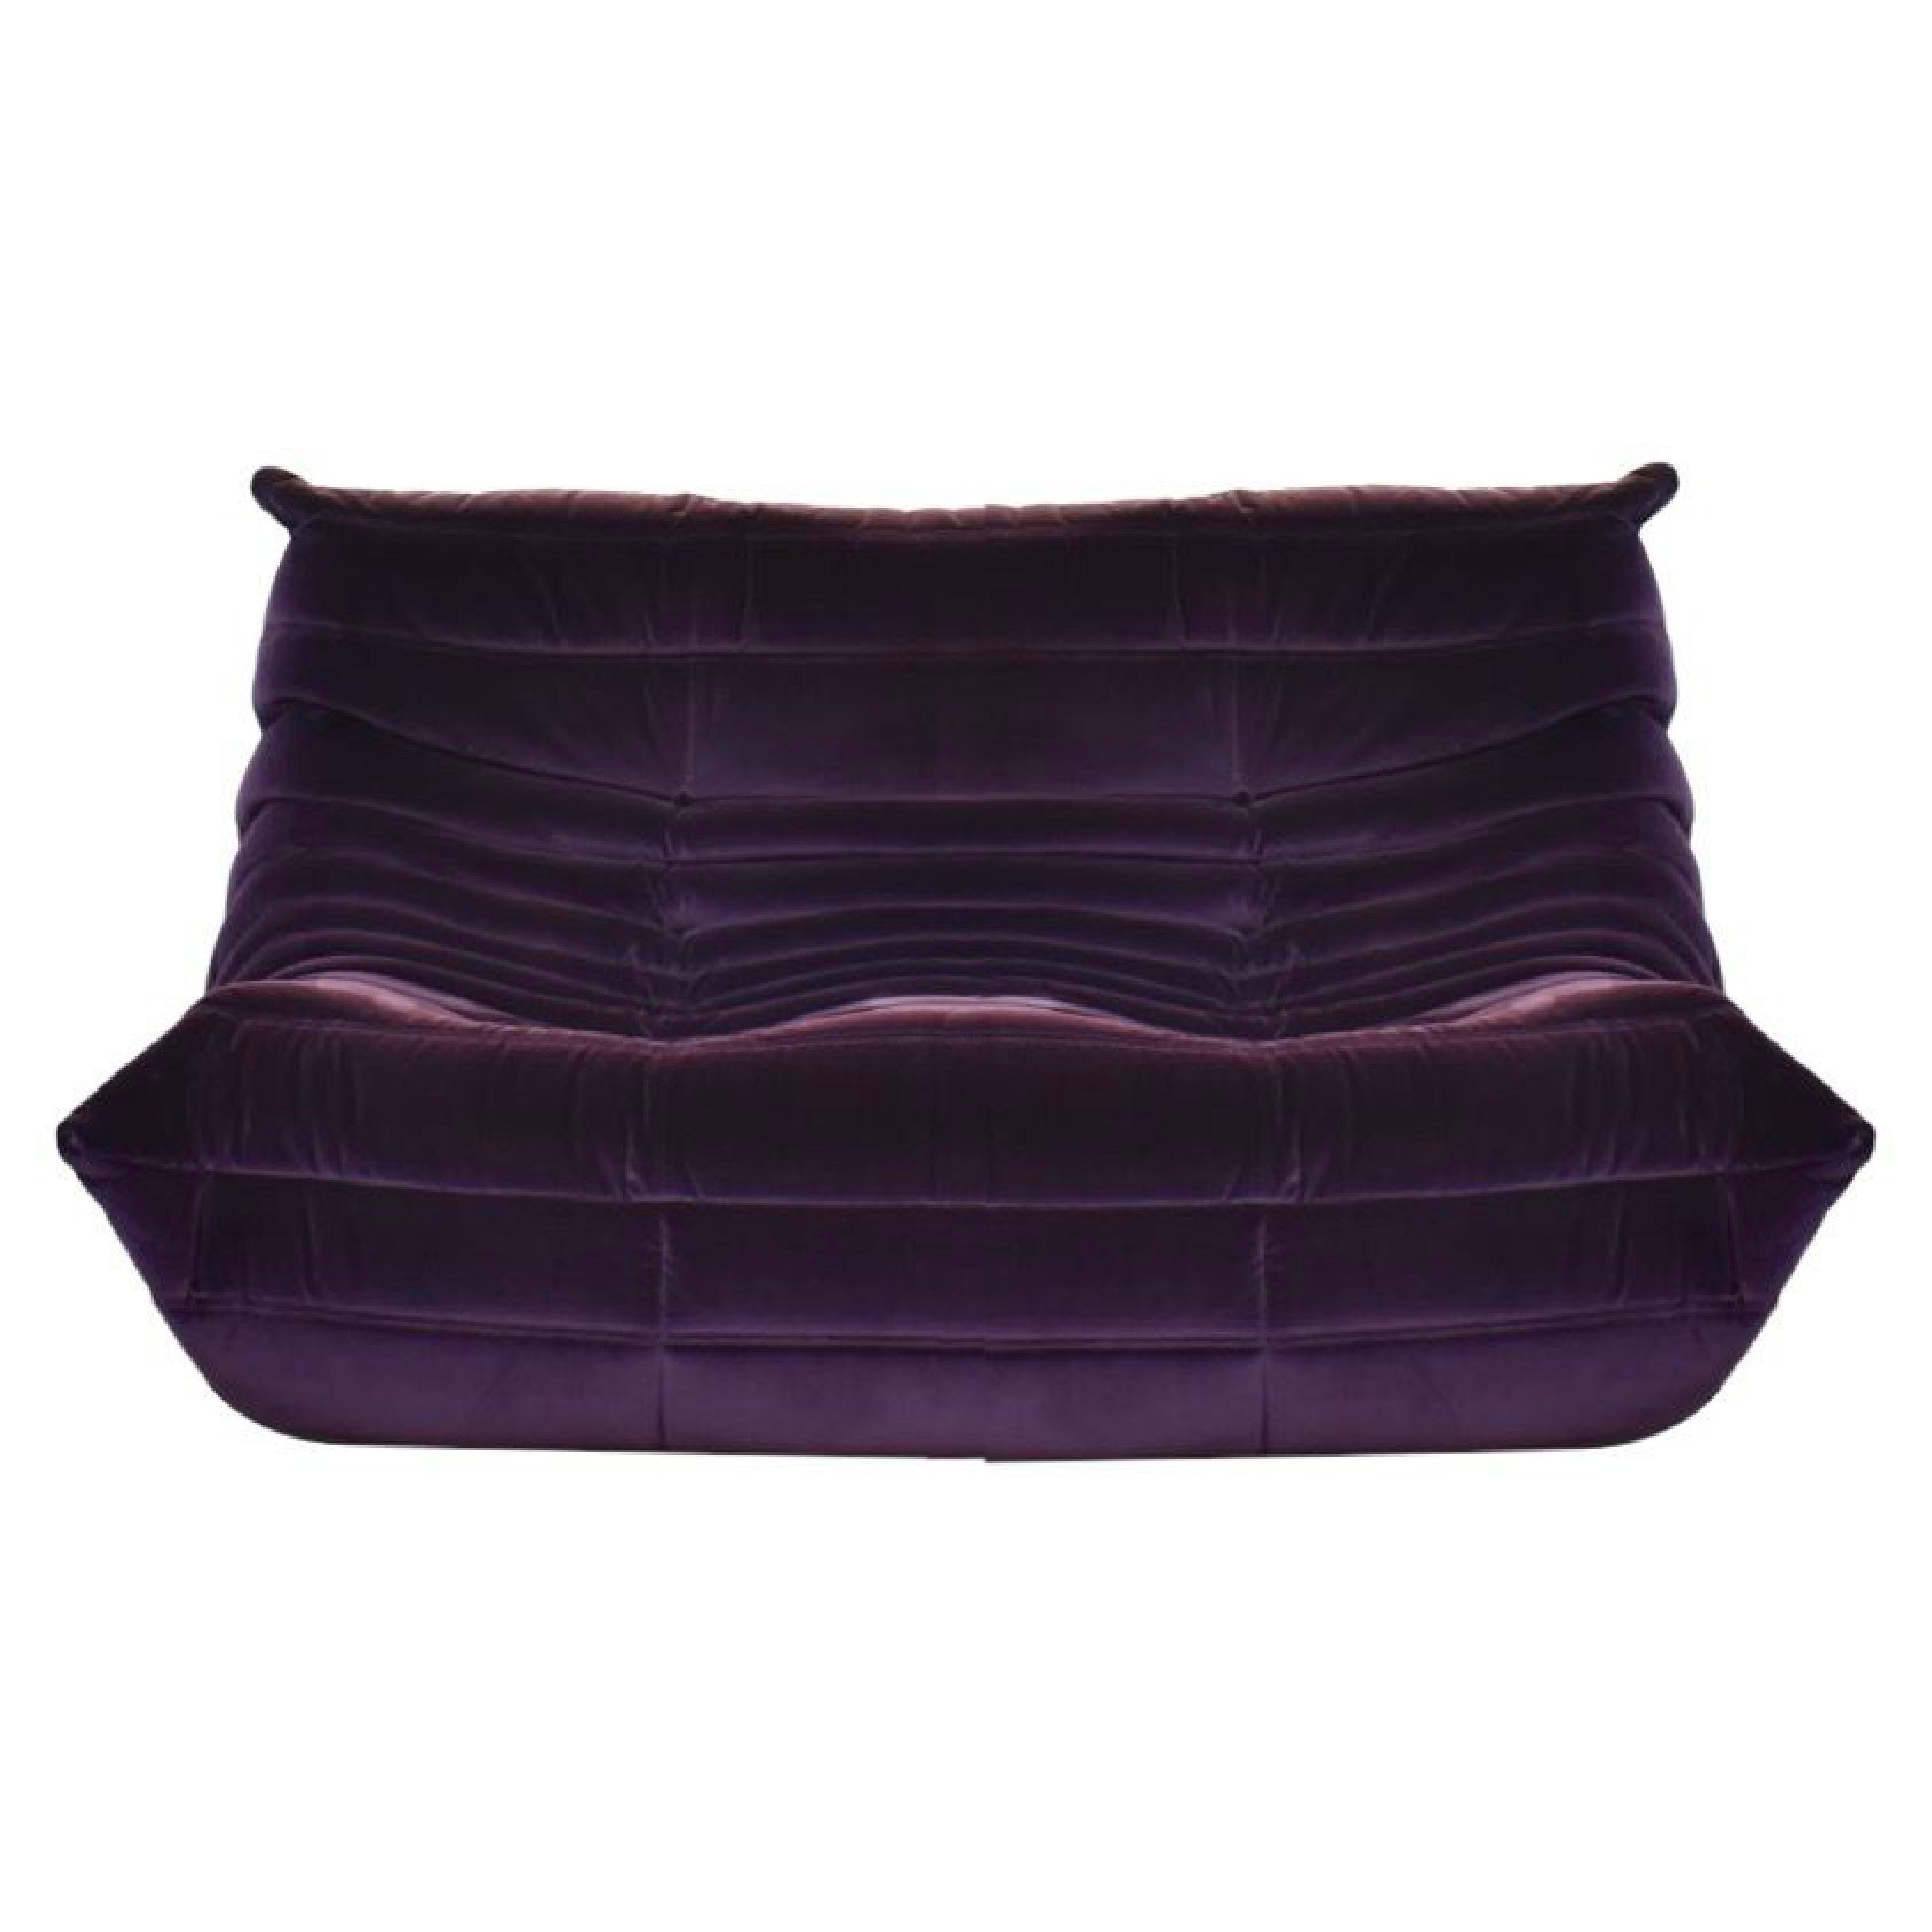 Michel Ducaroy for Ligne Roset Togo Loveseat Sofa, Herald Cassis Purple Velvet  In Good Condition In Brooklyn, NY